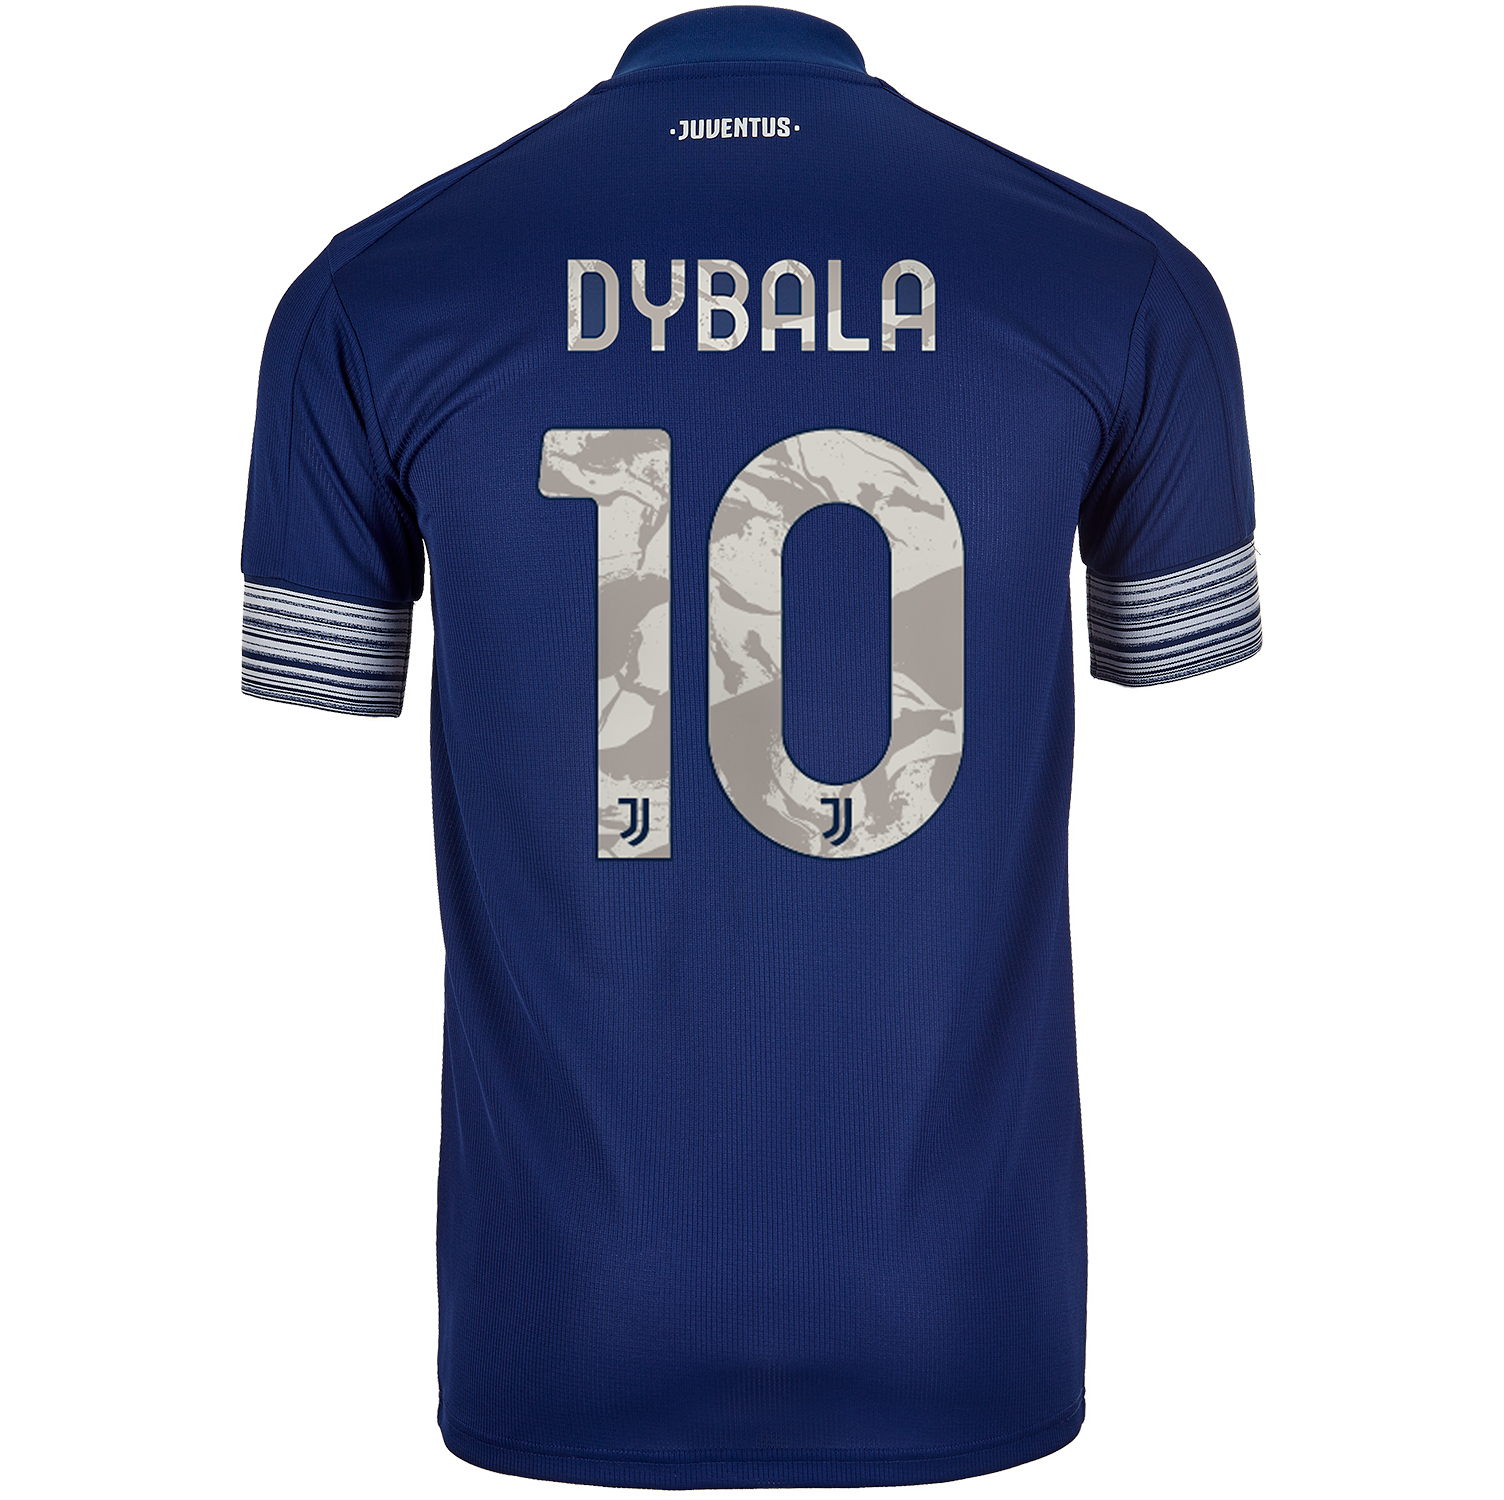 dybala kit number